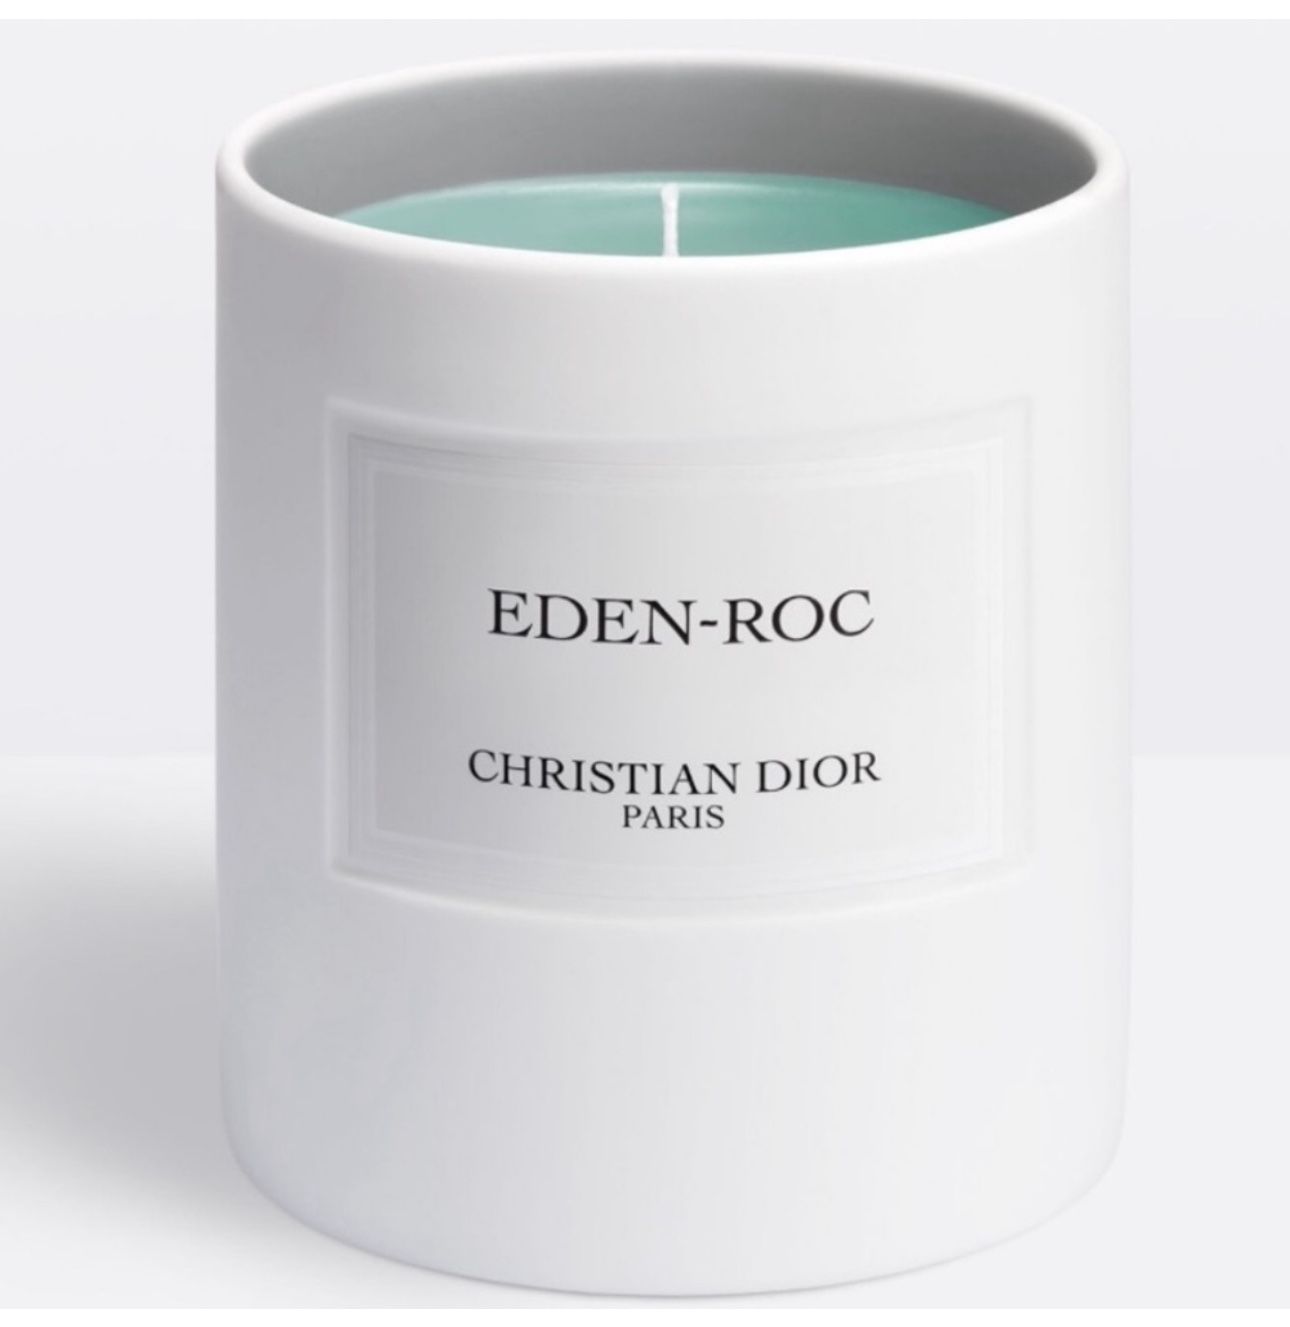  Eden Roc 85 gram candle